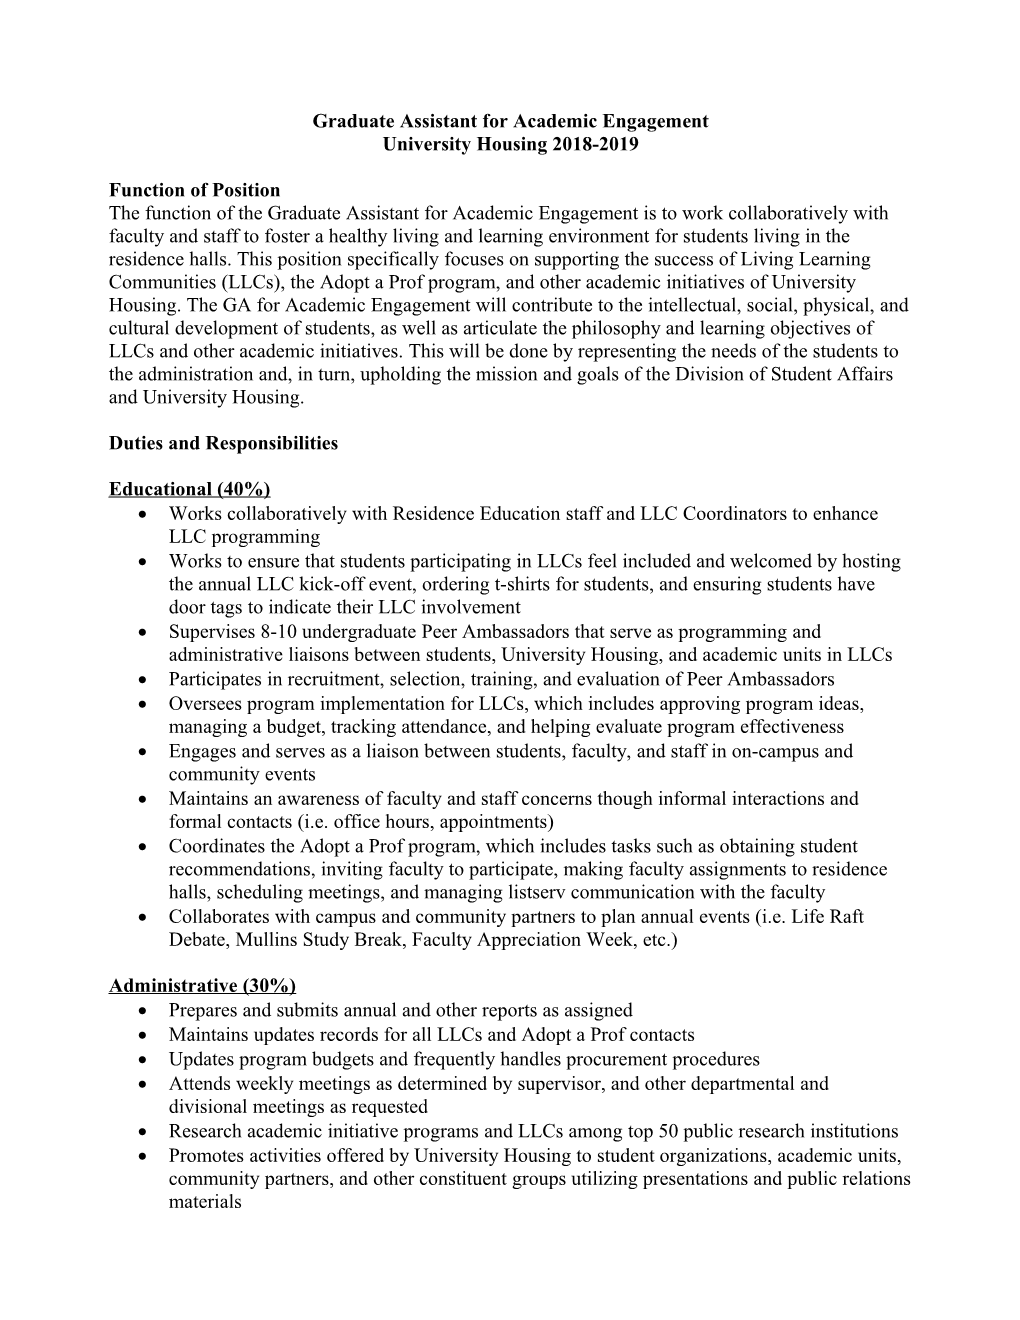 Graduate Resident Director Position